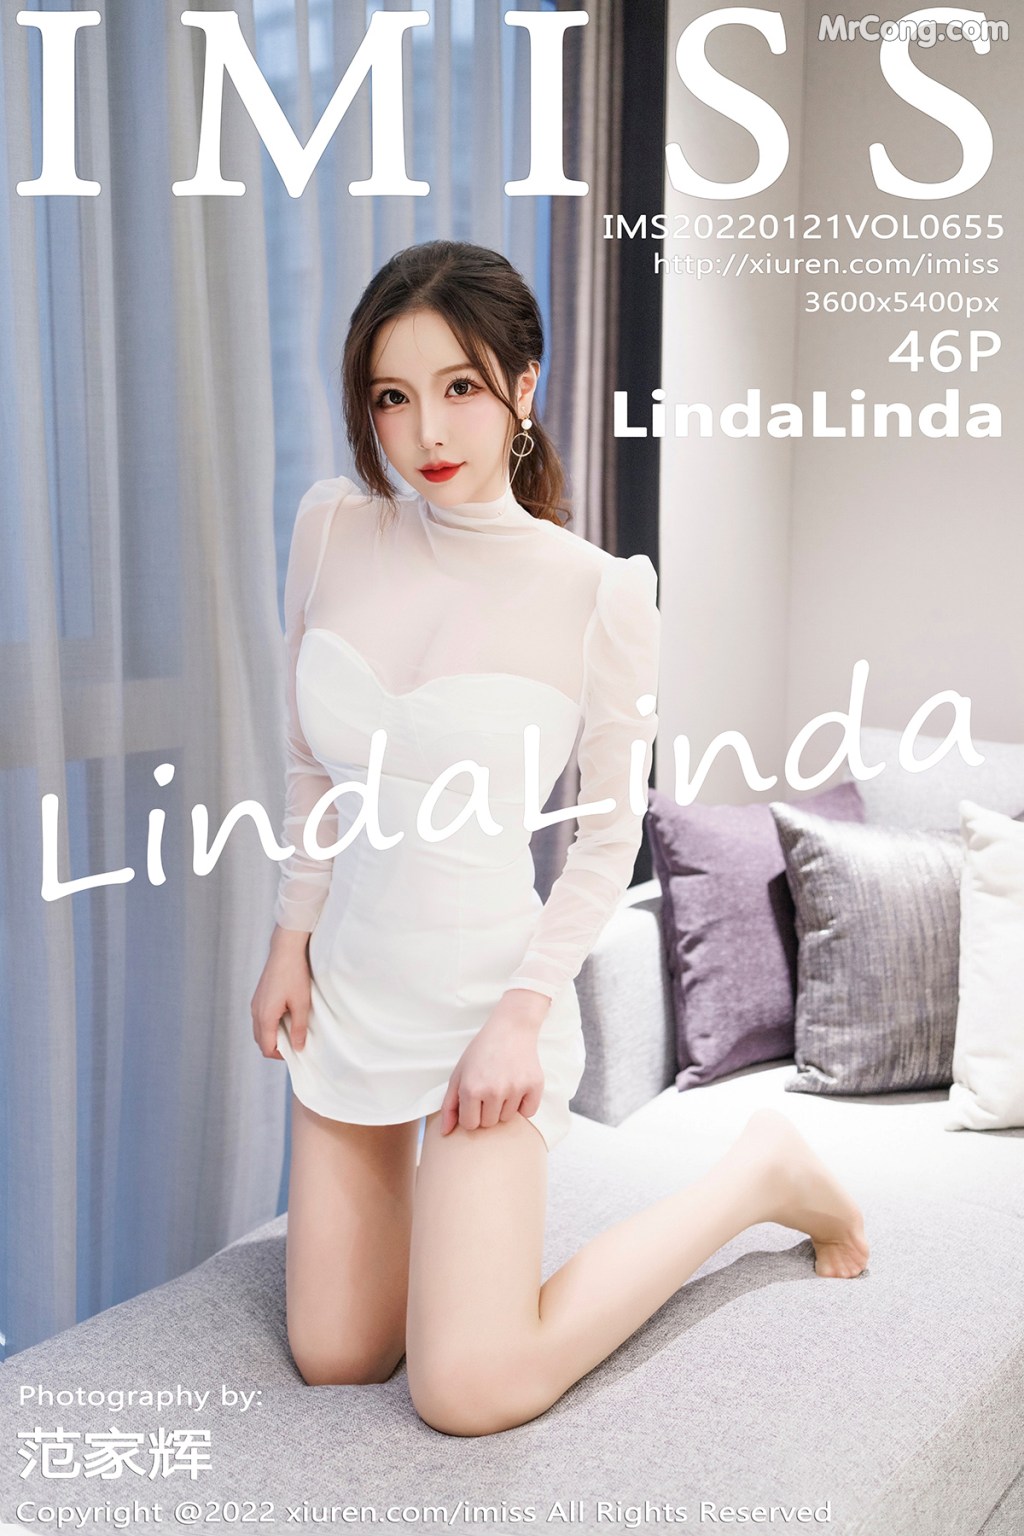 IMISS Vol.655: LindaLinda (47 photos)